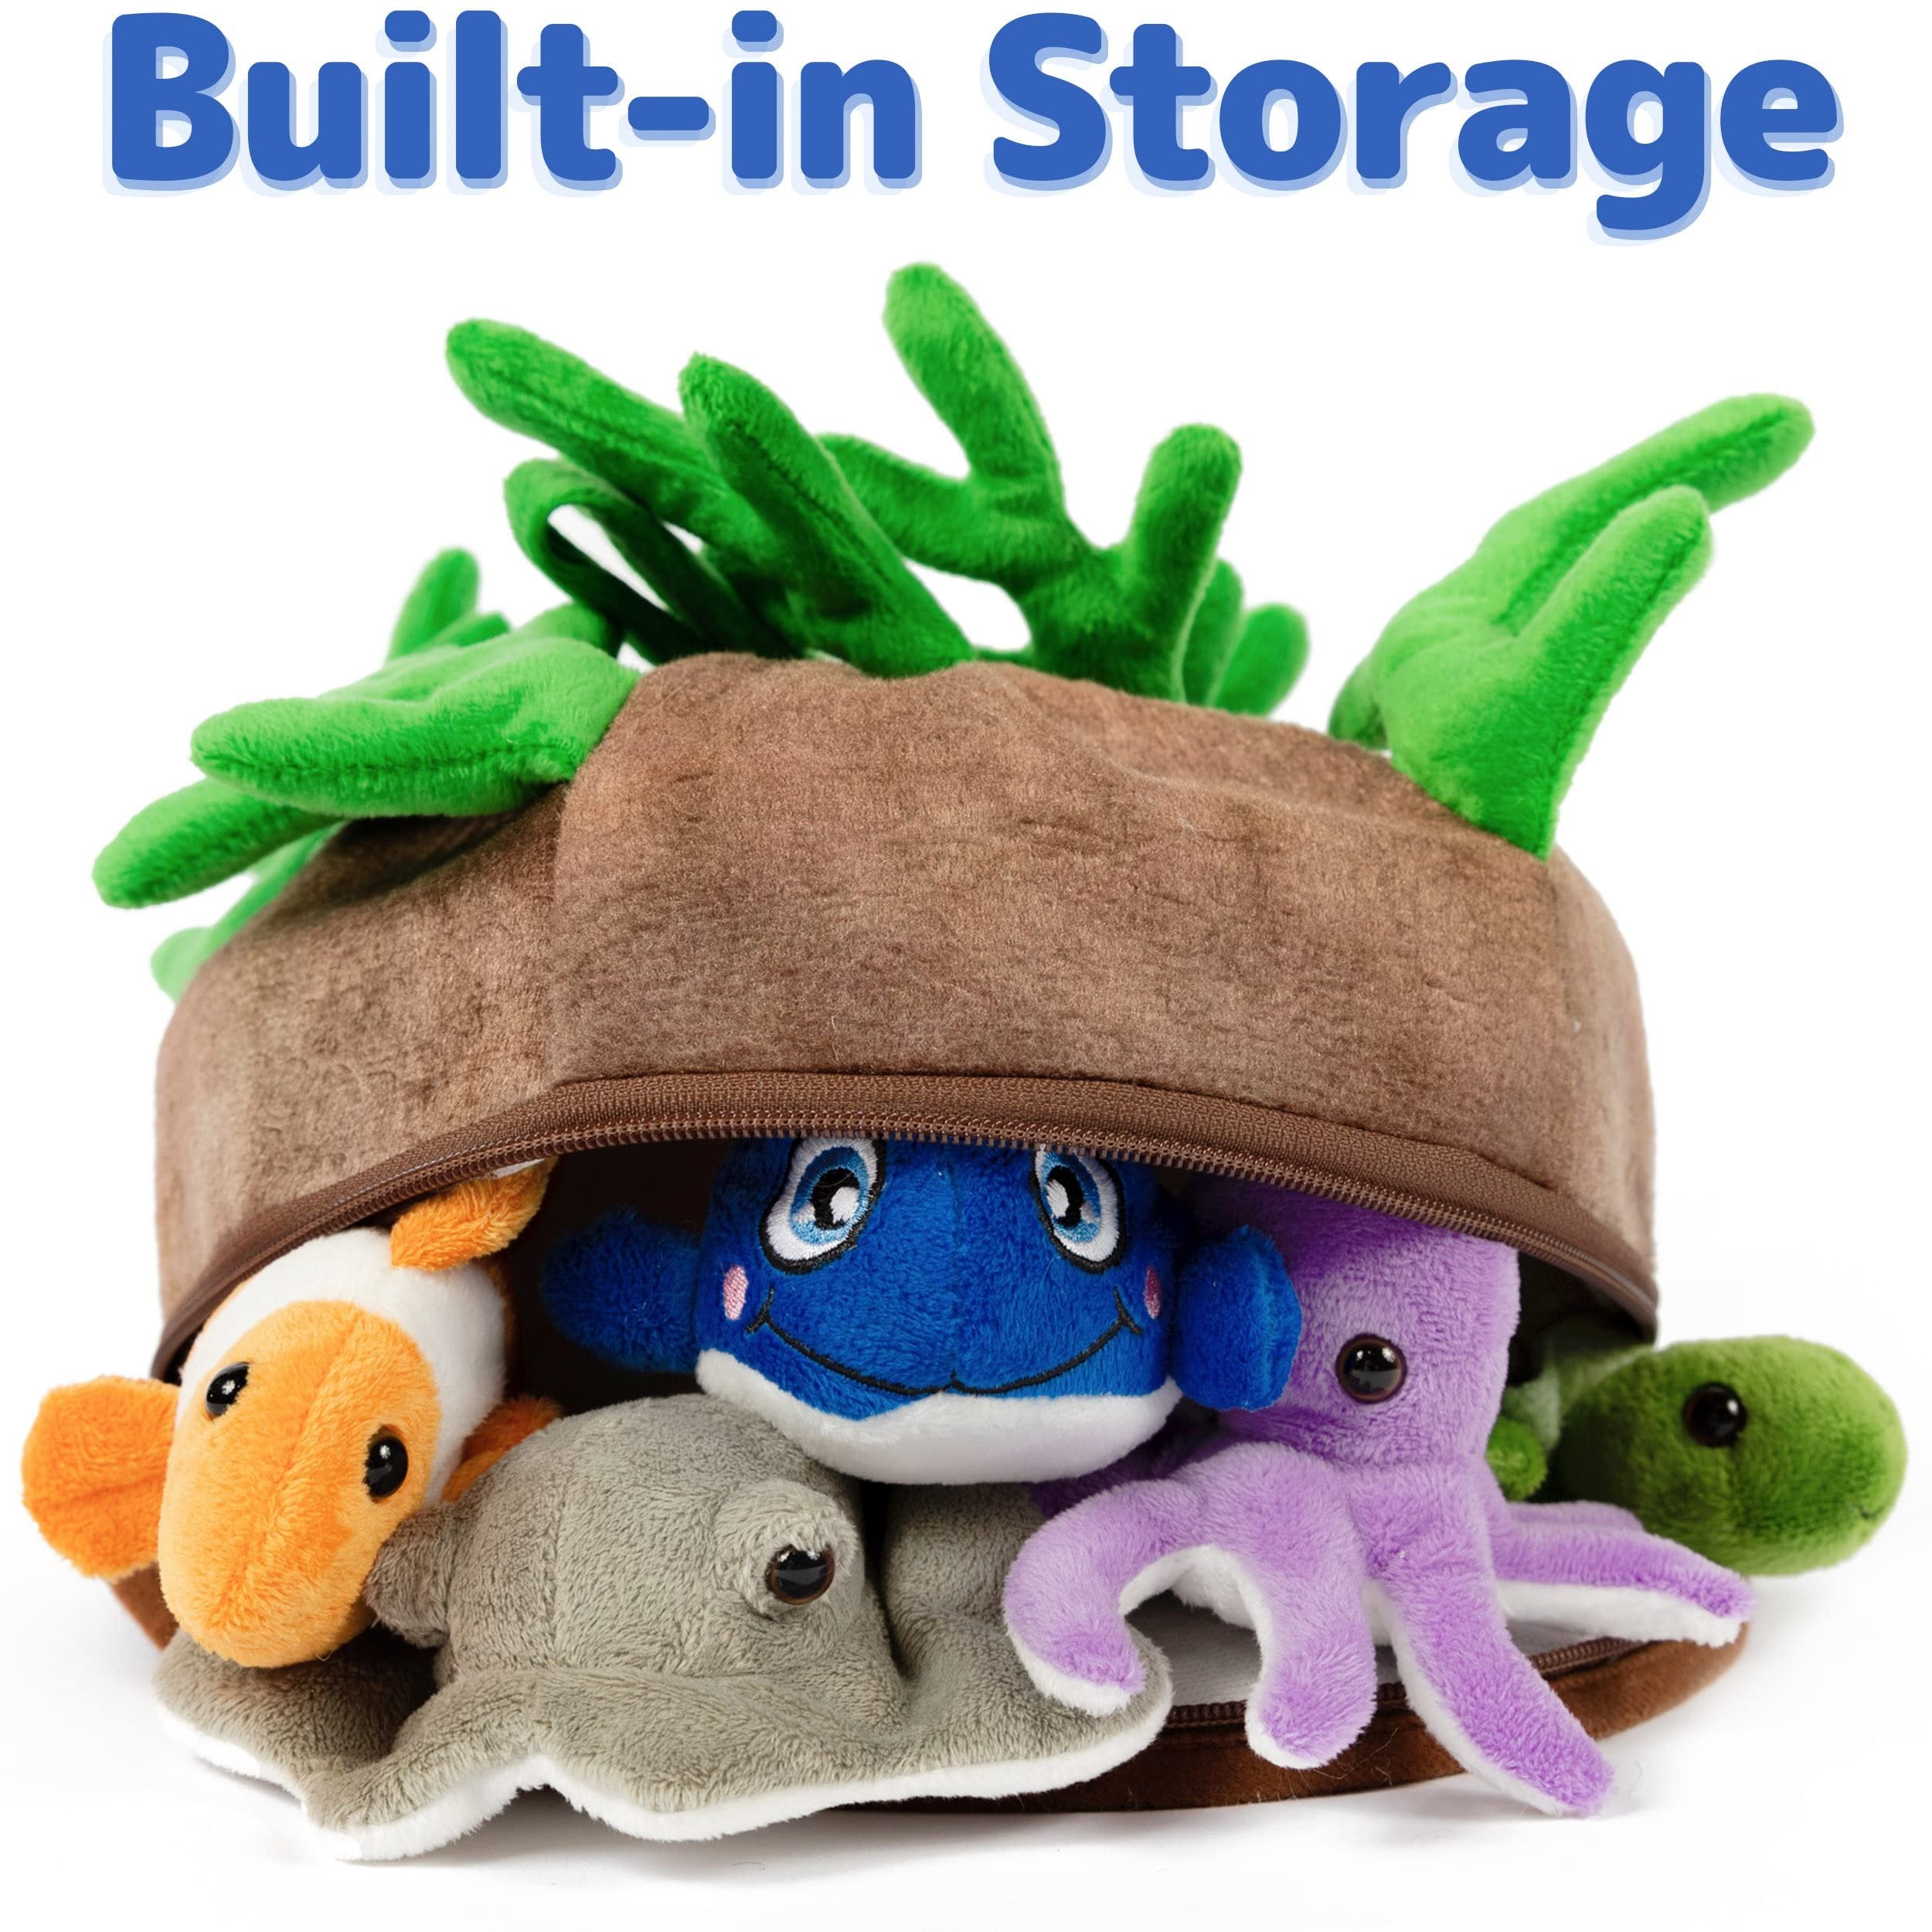 Prextex 5-pc Stuffed Sea Animal & Toy Storage | Soft Plush Sea Creatures Toys for Kids | Small/Mini Stuffed Animals in Bulk | Cute Toy Ocean Decor, Ocean Animals | Birthday Gift Bag, Party Favor/Decor